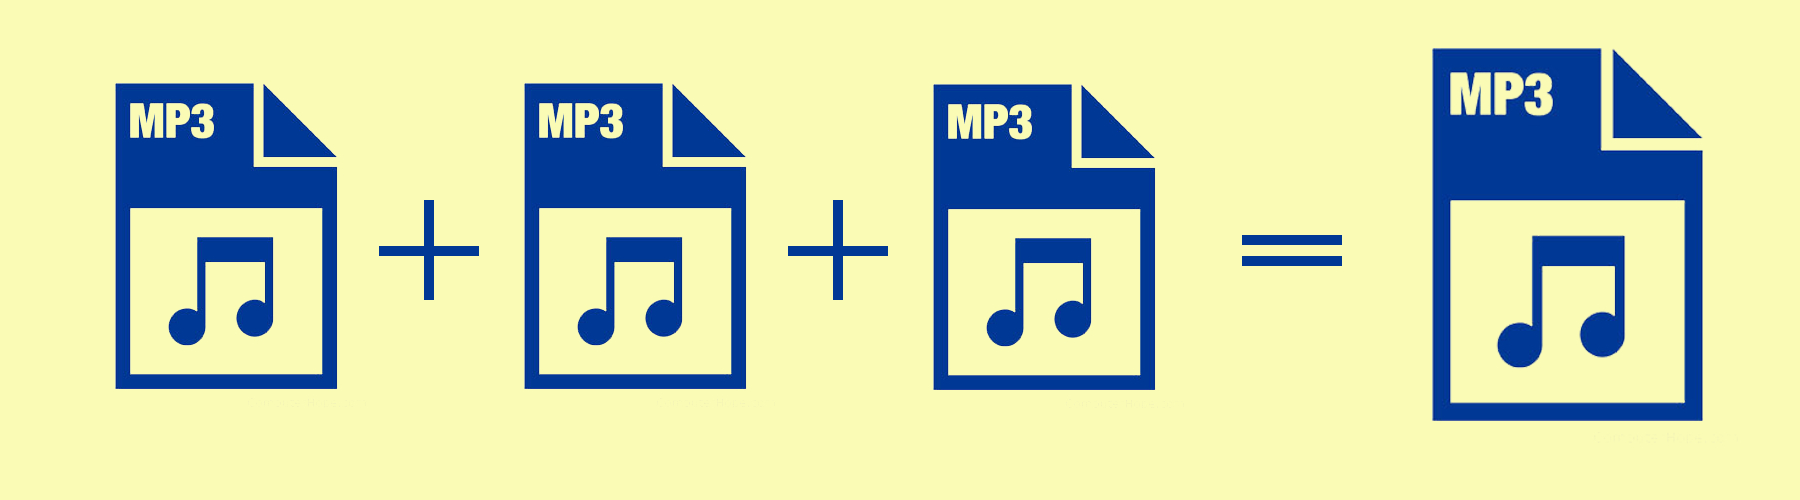 MP3 Merger.